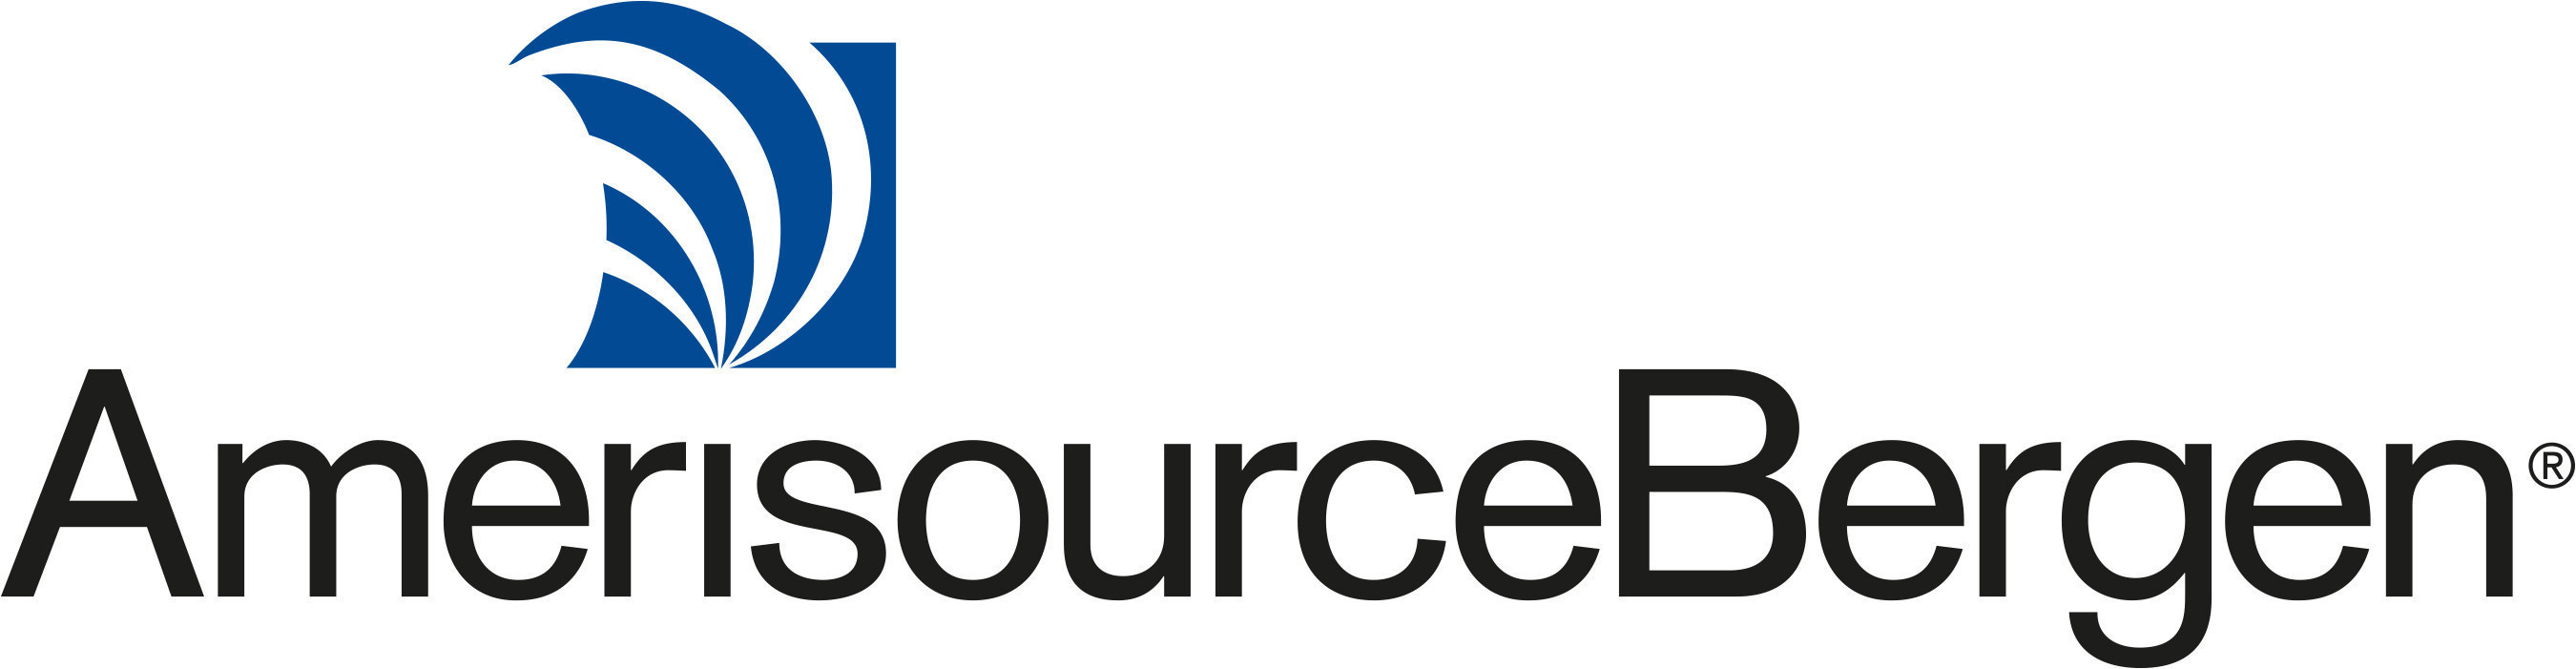 Amerisourcebergen Logos